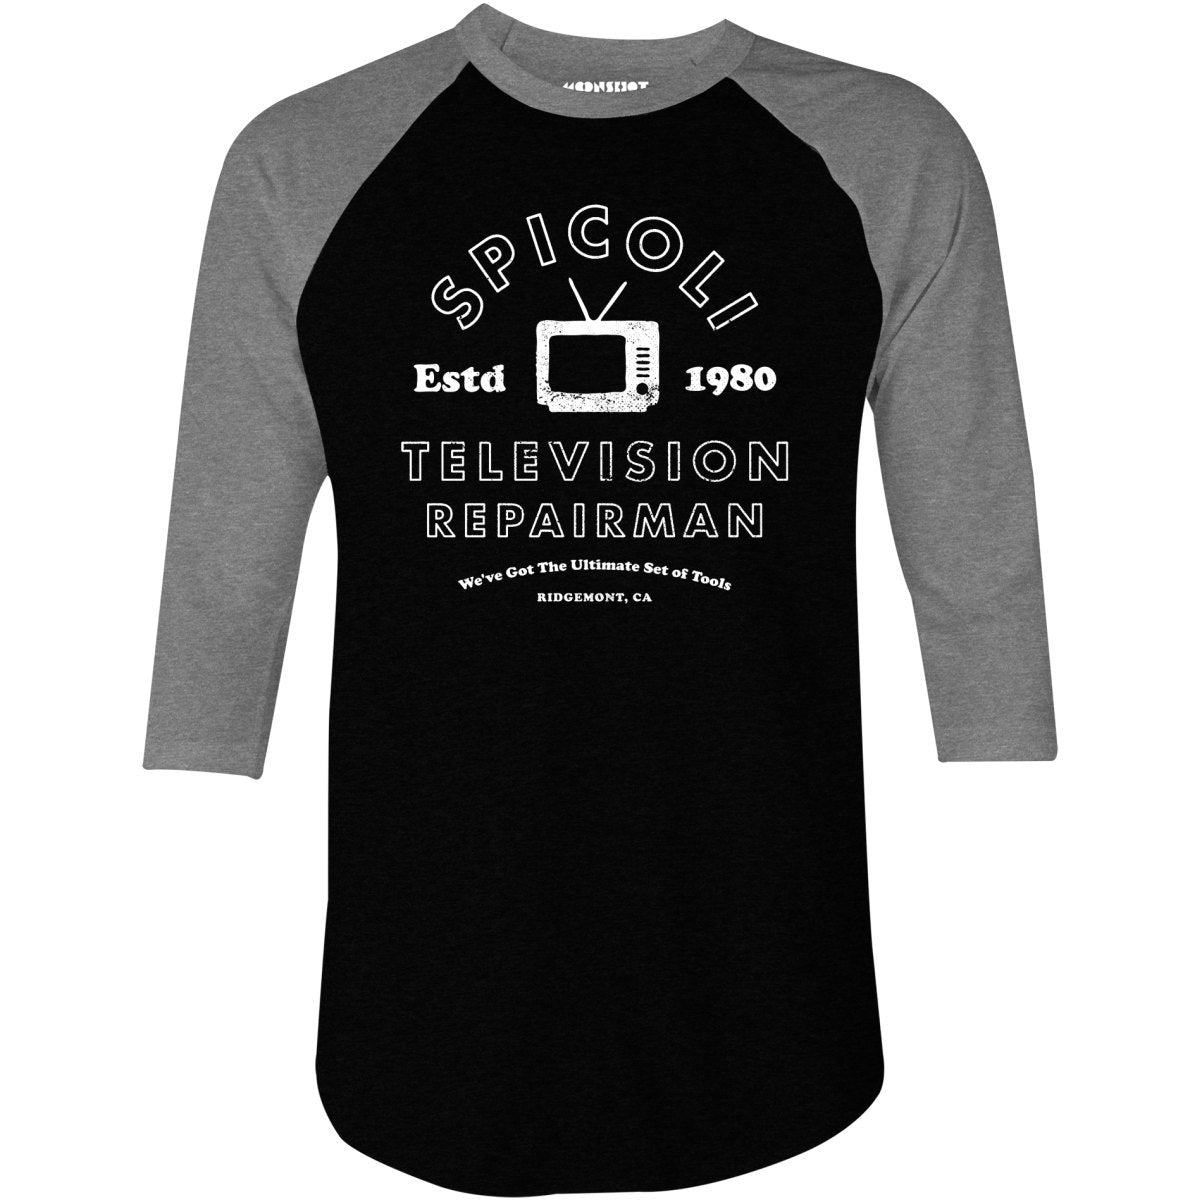 Spicoli Television Repairman - 3/4 Sleeve Raglan T-Shirt